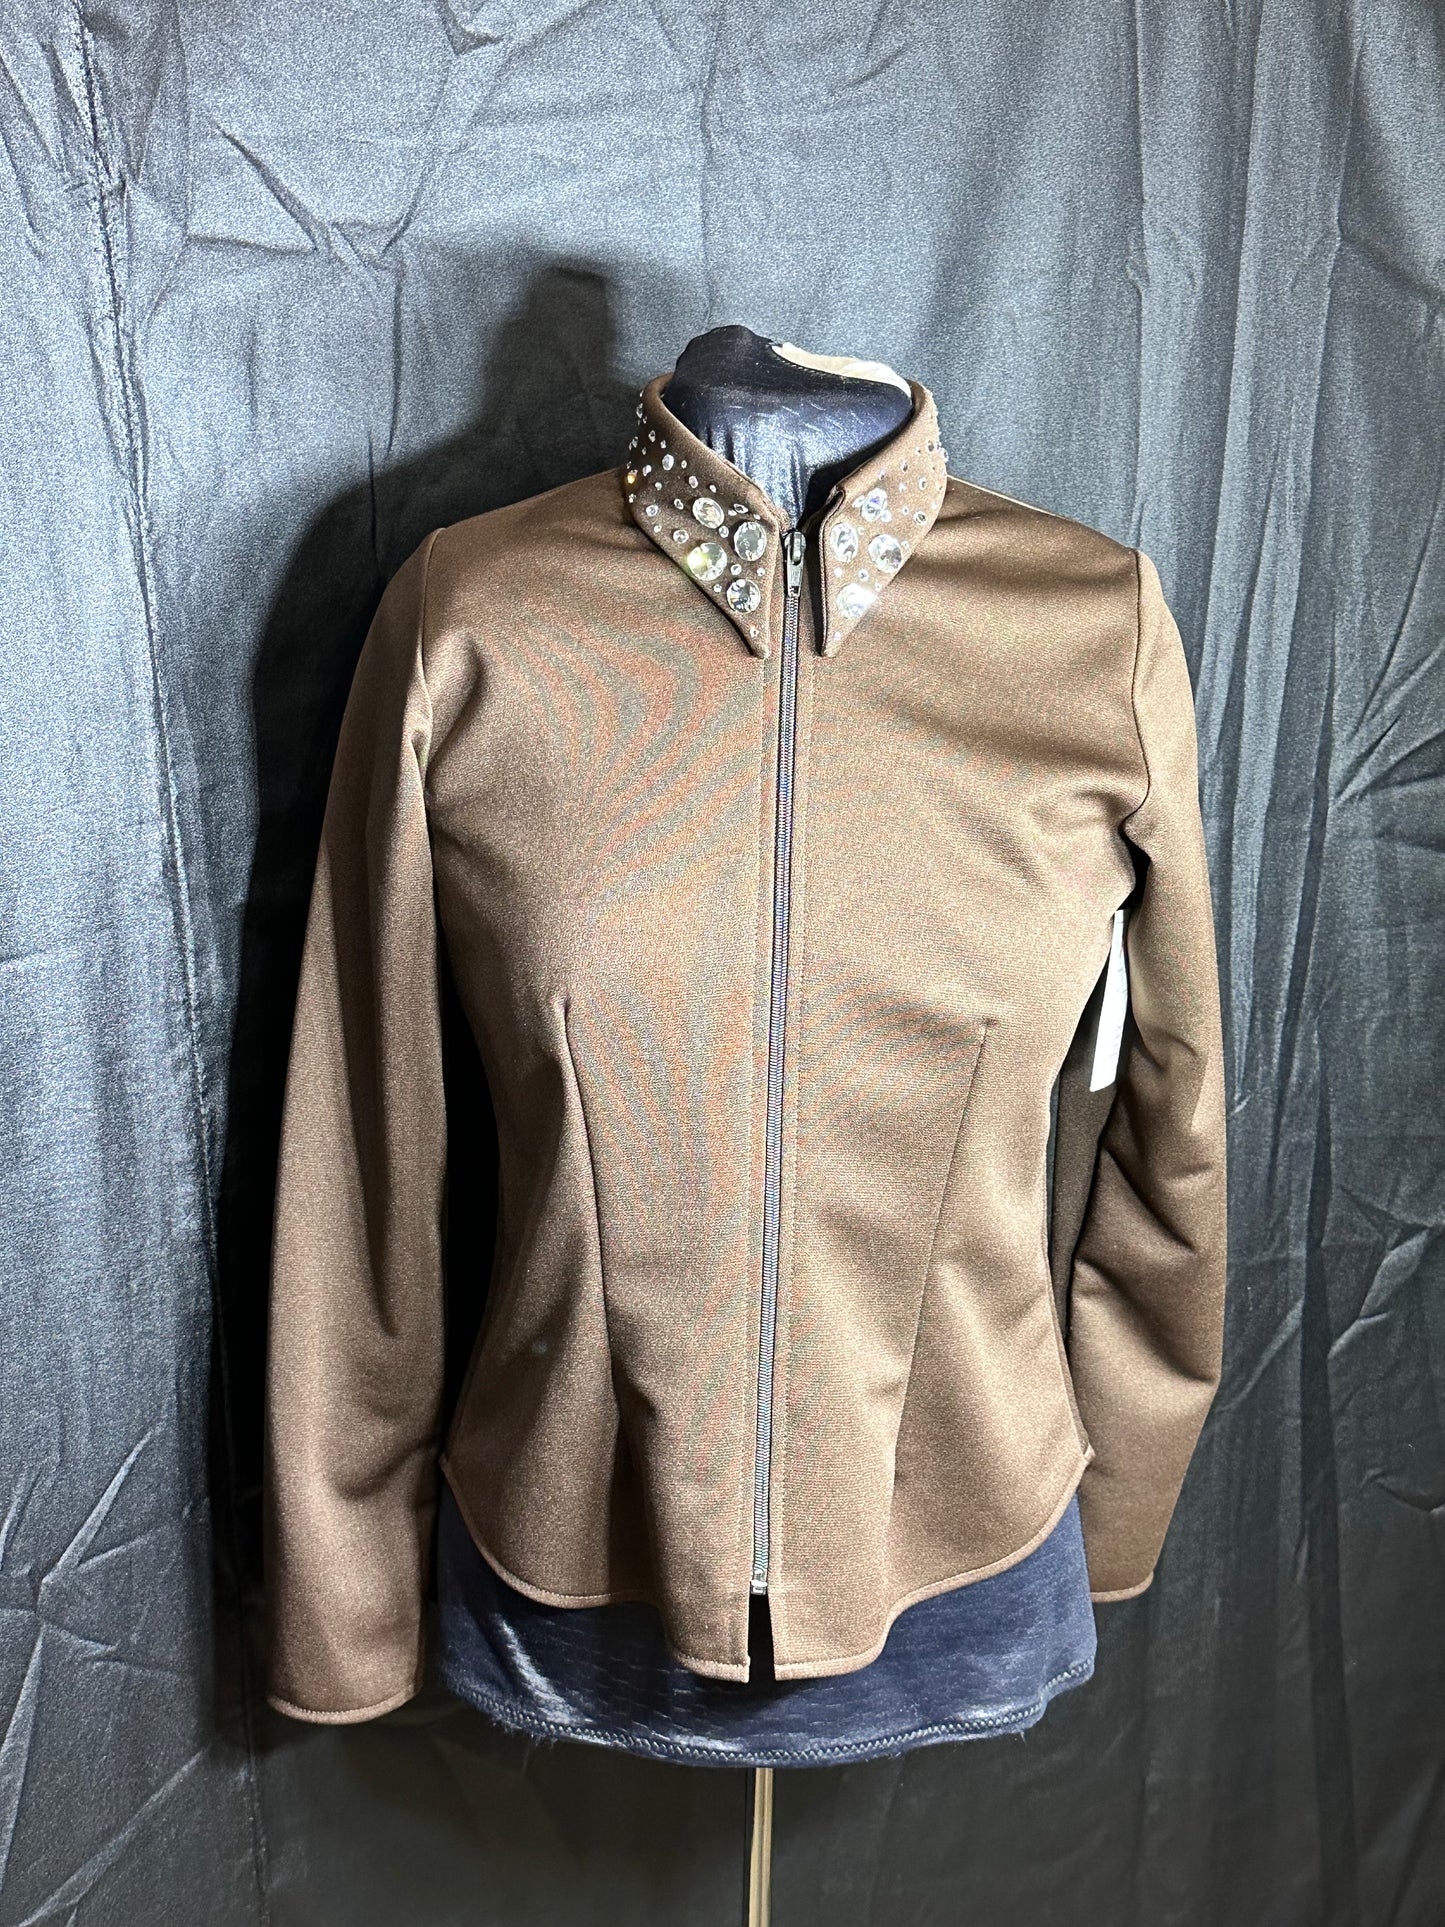 Size medium brown plain zip up shirt with rhinestone collar